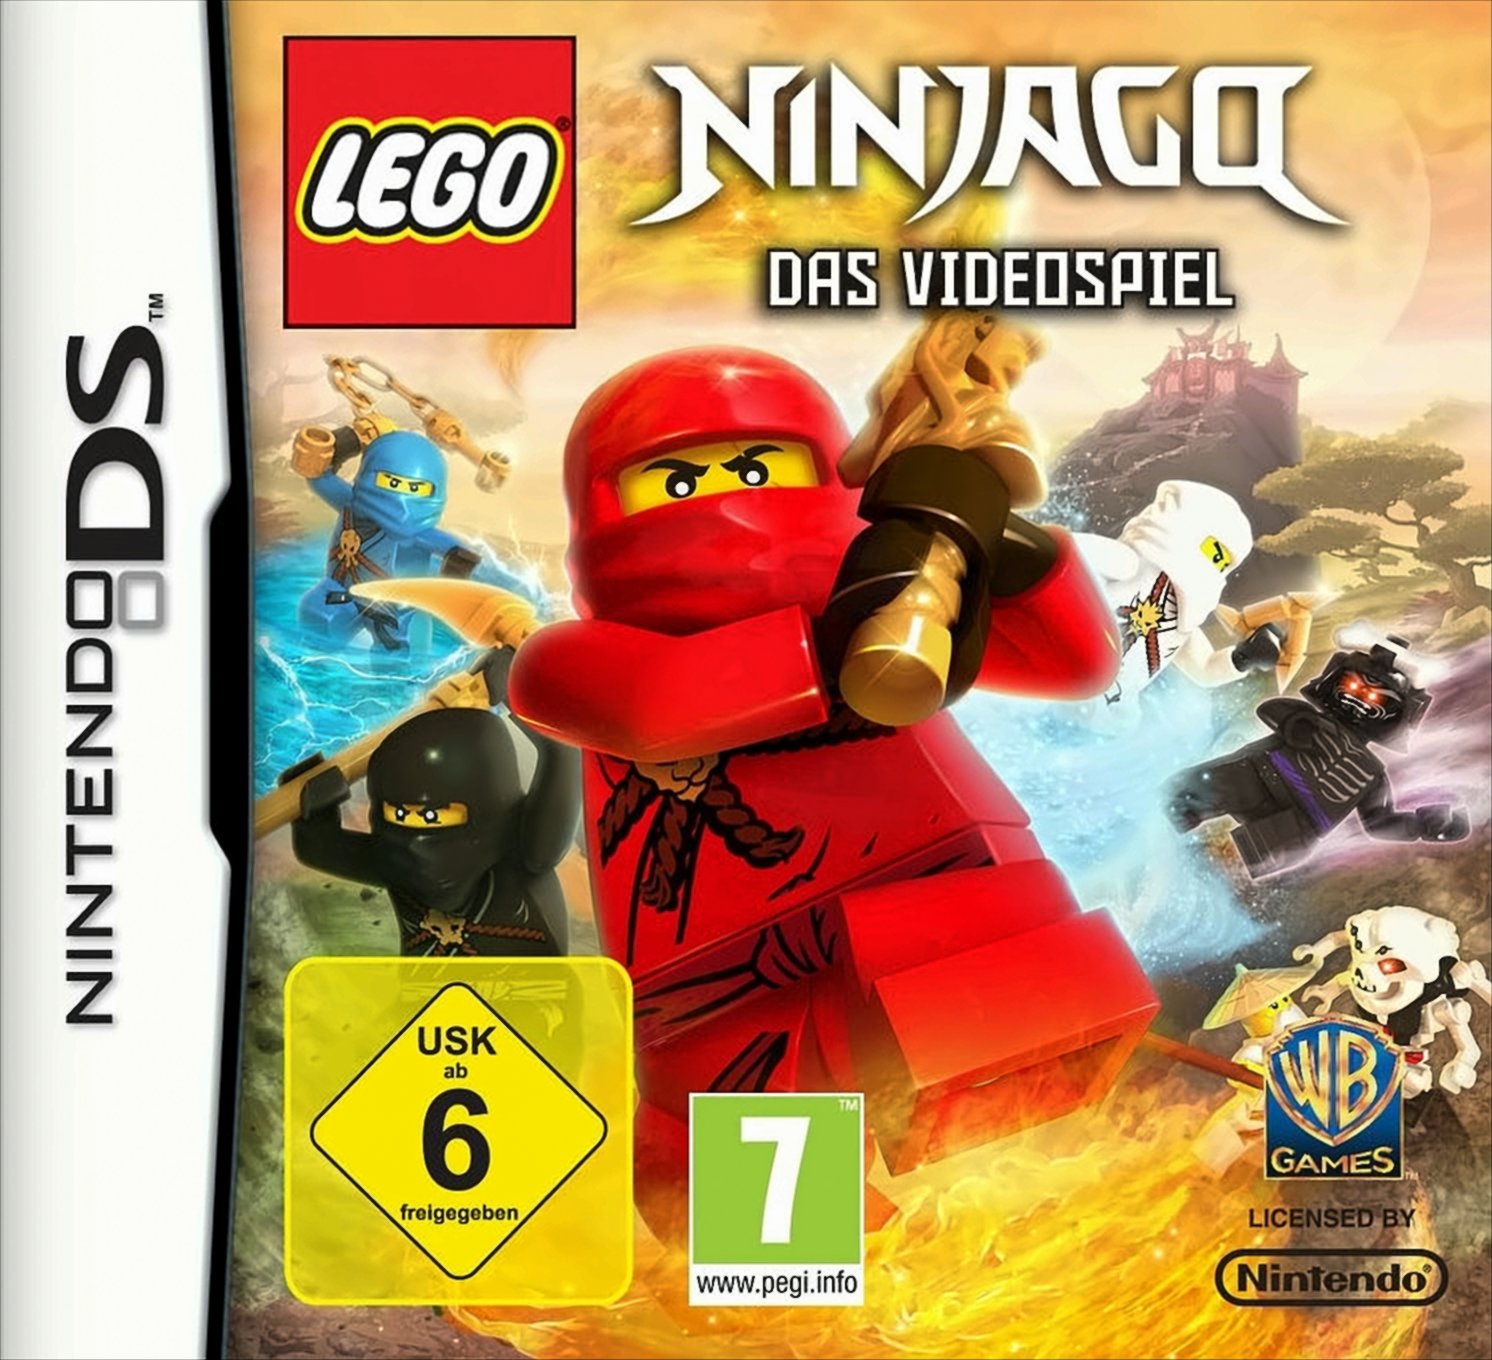 Lego Ninjago von Warner Games